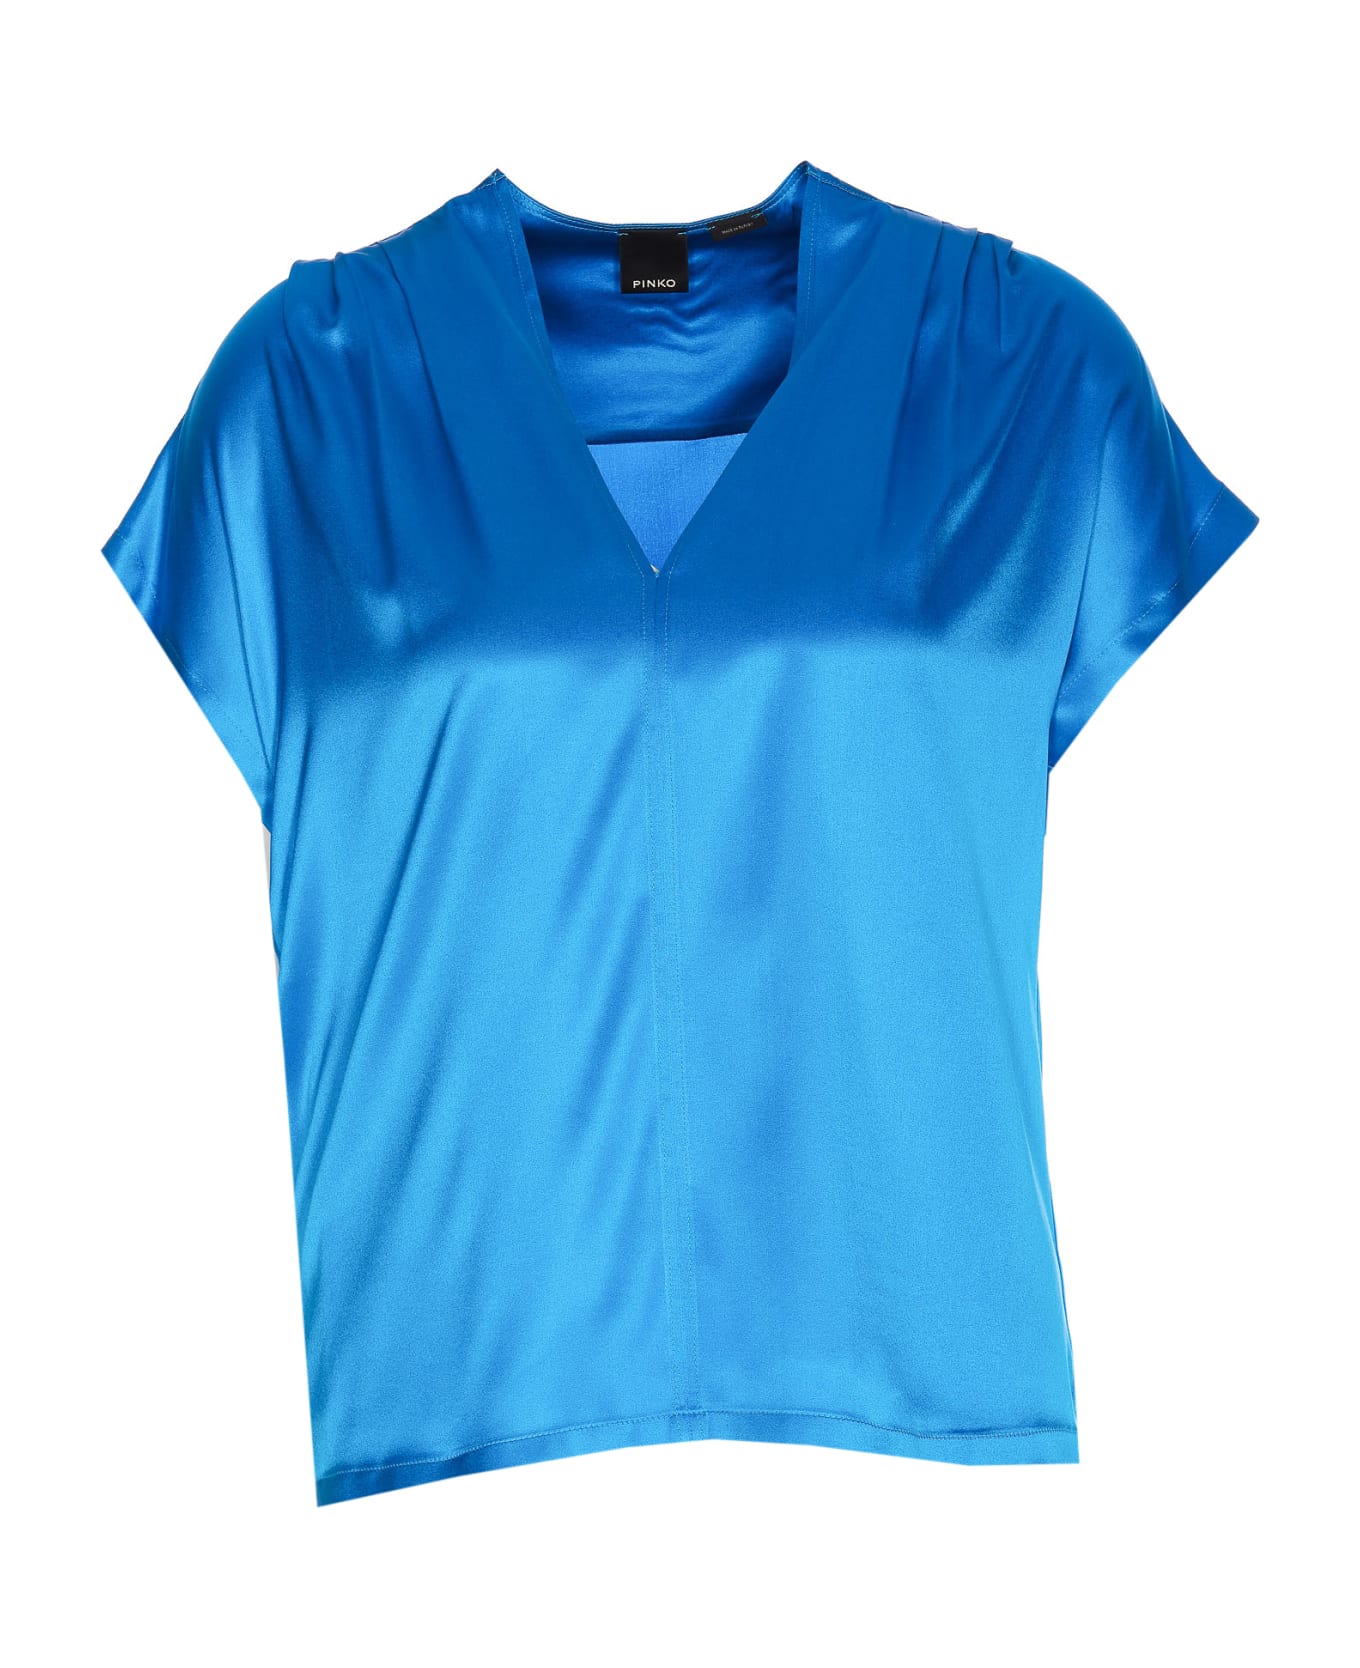 Pinko Breve Shirt - Blue シャツ